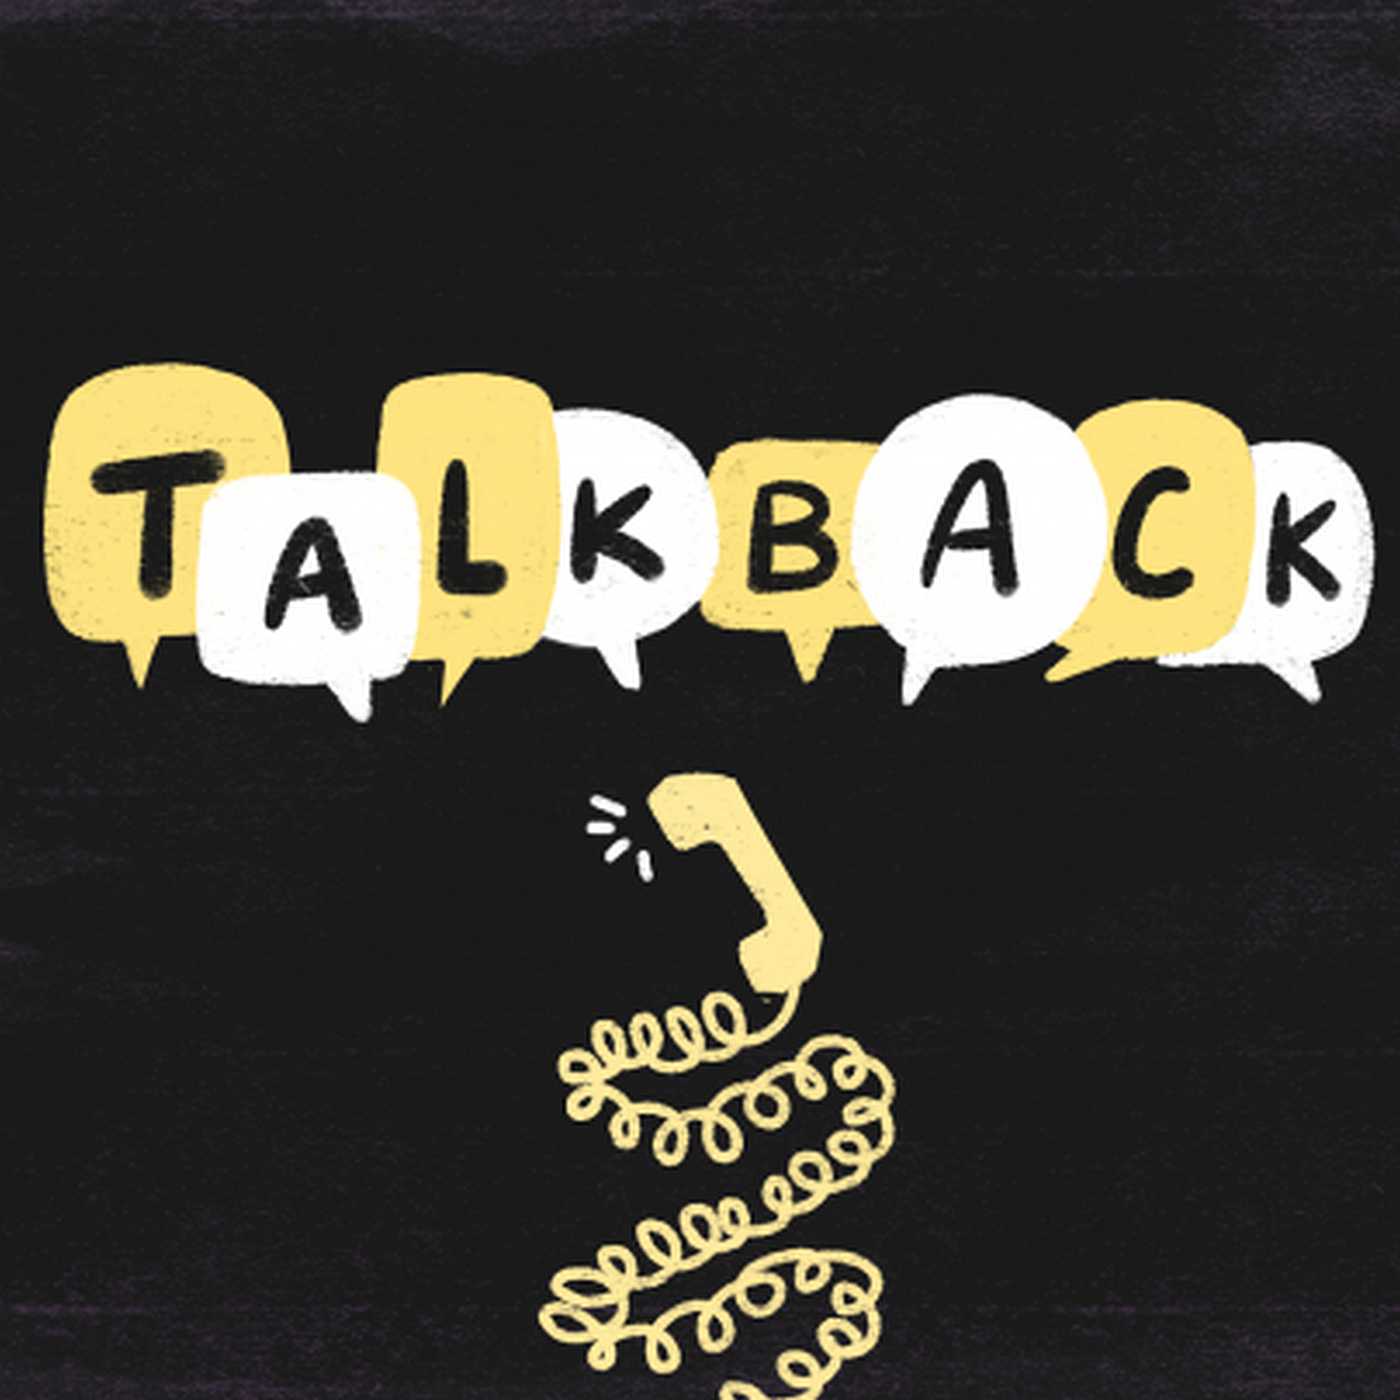 Talkback Thursday: Malaysians and Morals